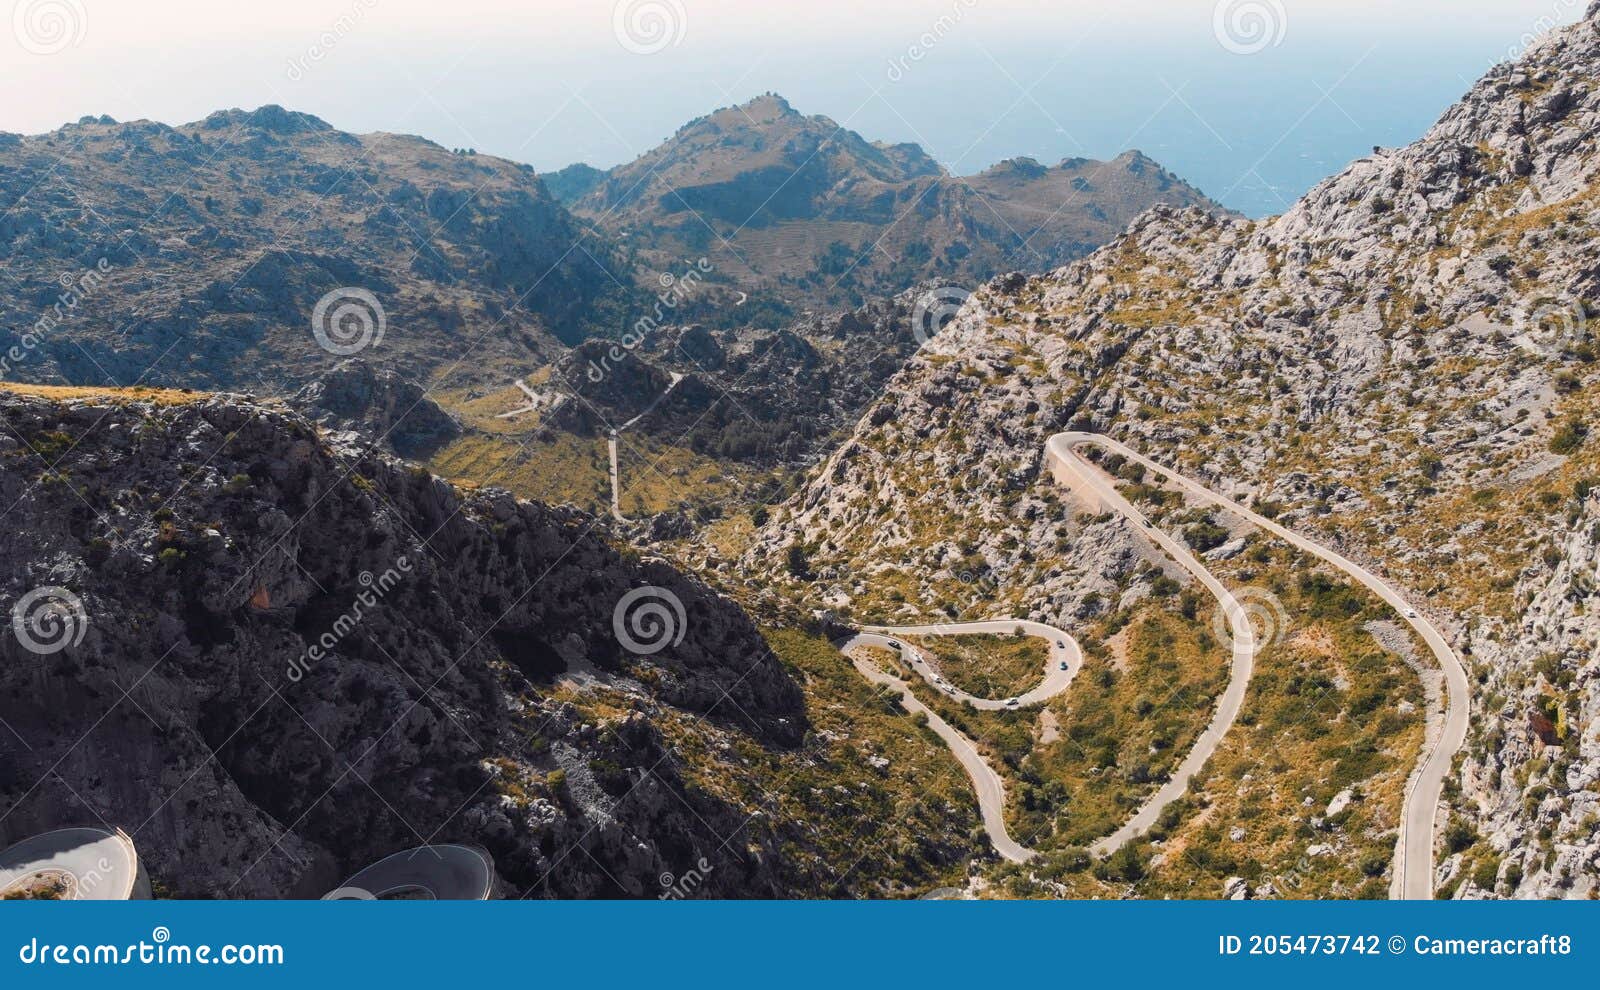 the road the knotted tie - nudo de corbata in the serra de tramuntana mountain, mallorca, balearic islands